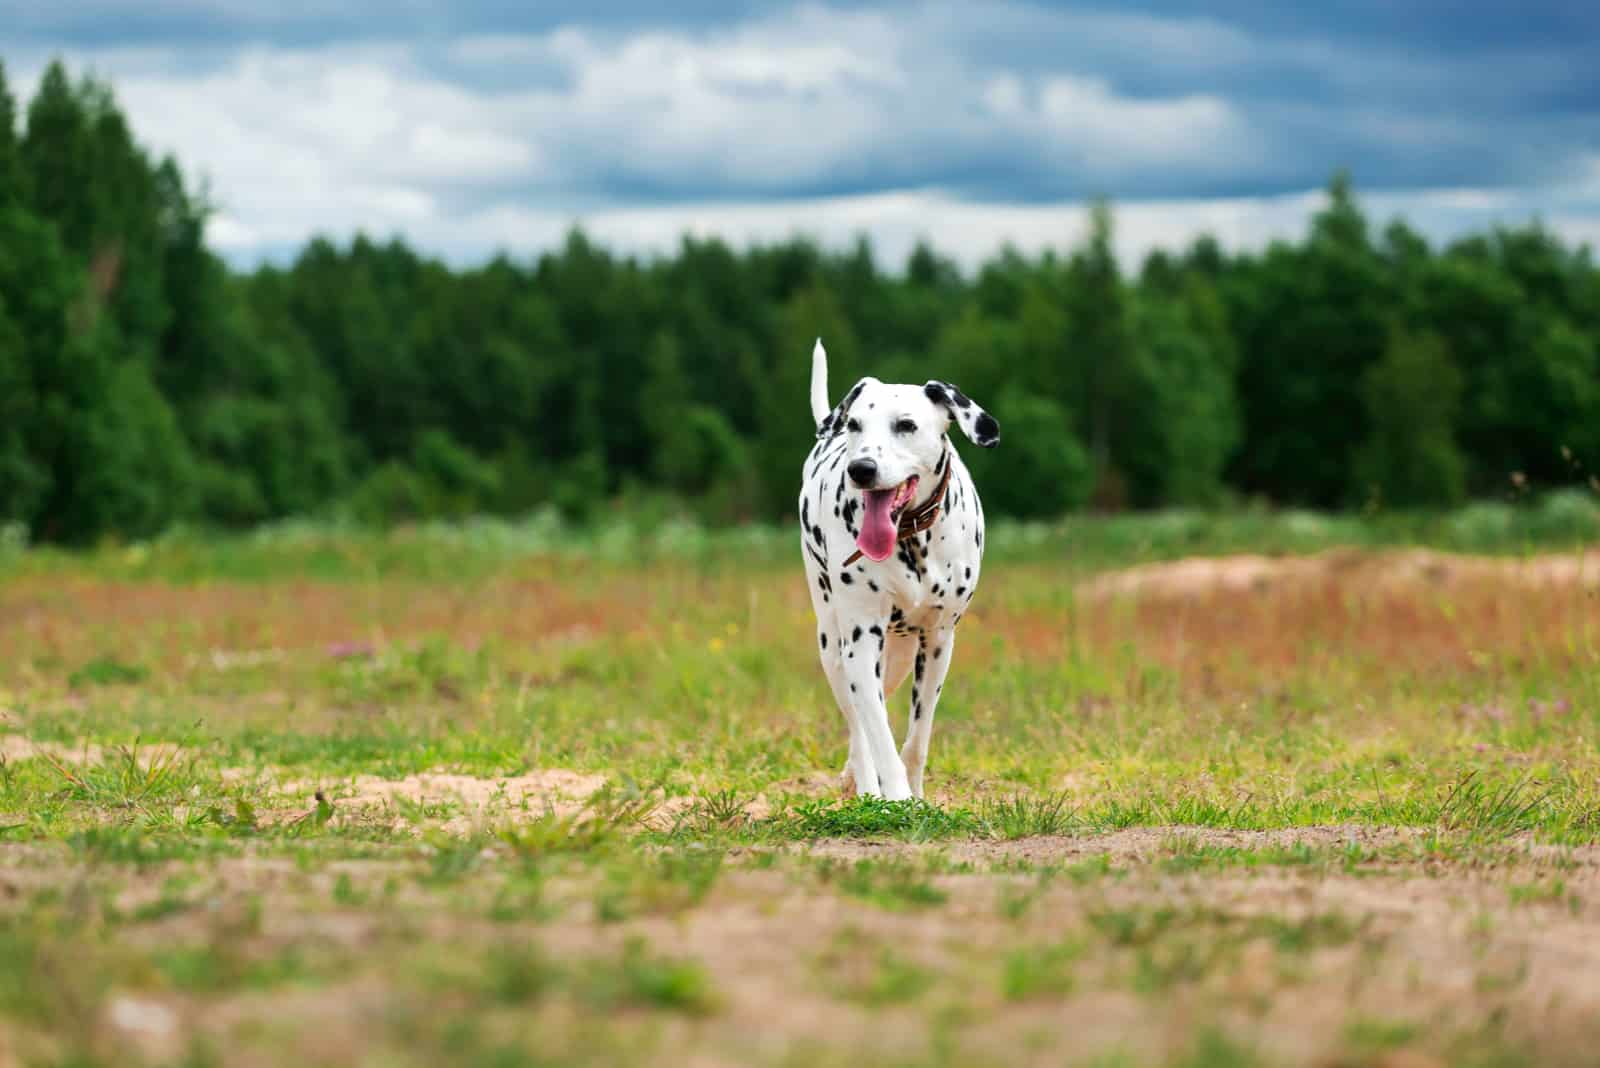 Big dog Dalmatian playing and having fun